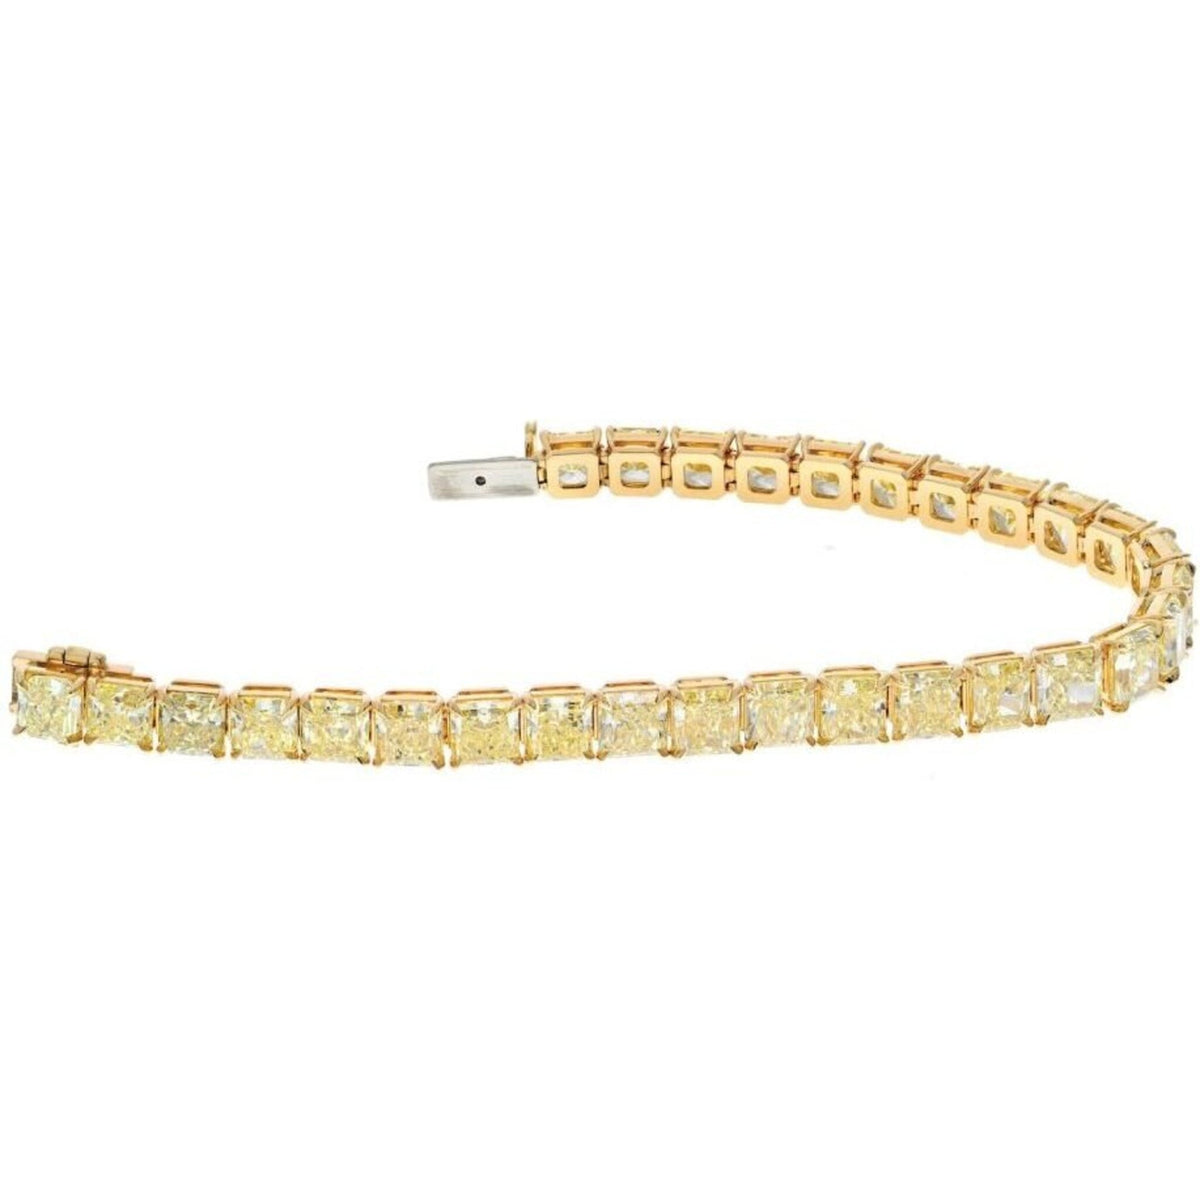 Elegant tennis bracelet with radiant cut diamonds